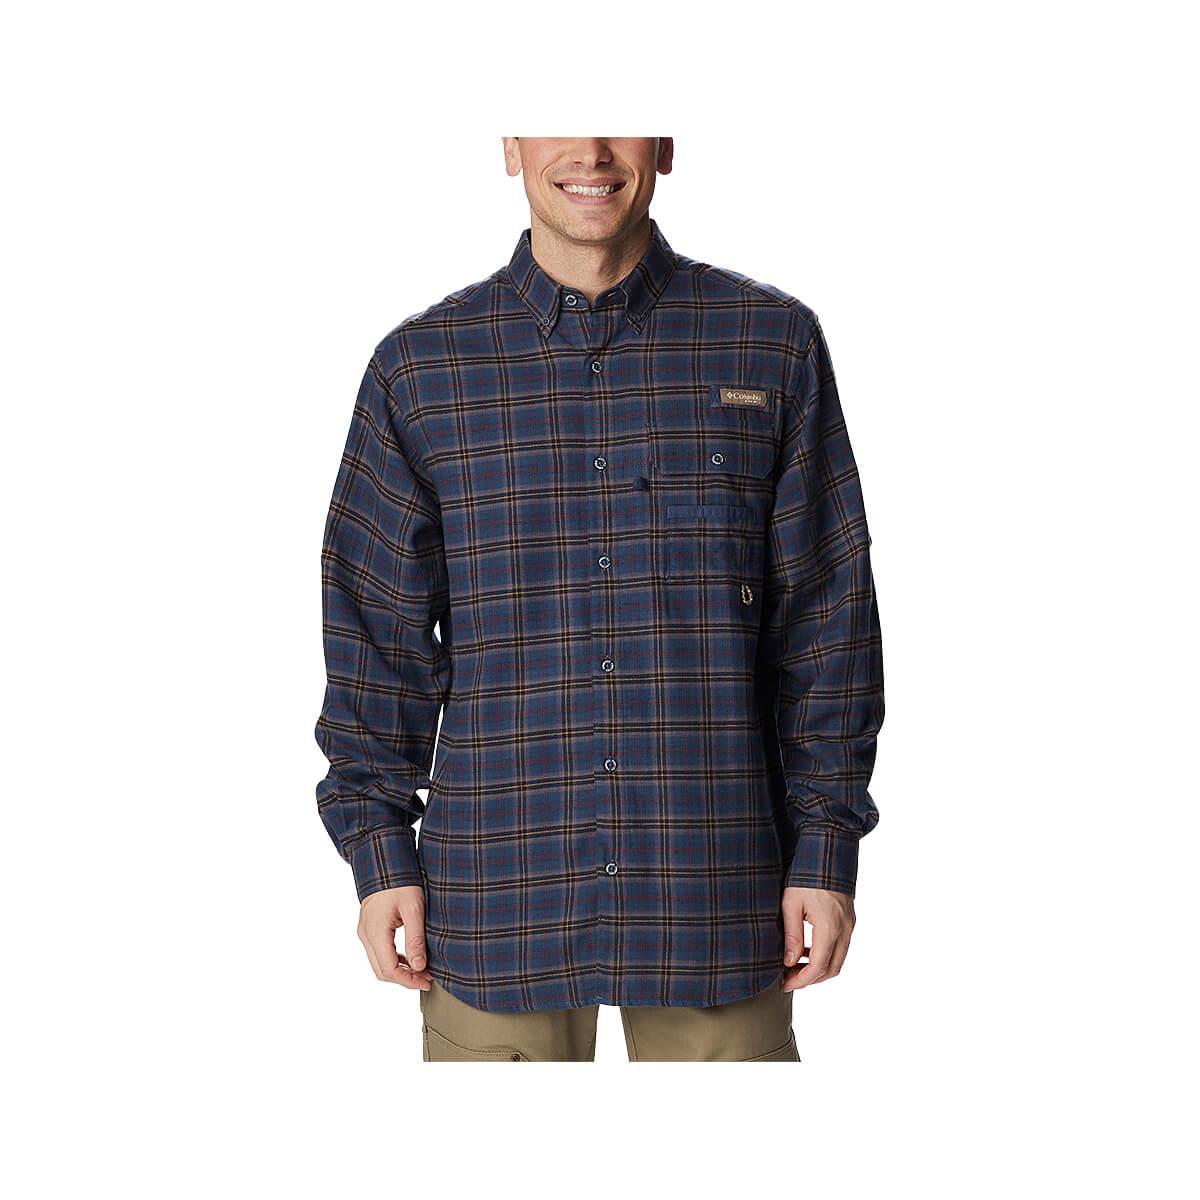  Men's Phg Sharptail Flannel Long Sleeve Shirt